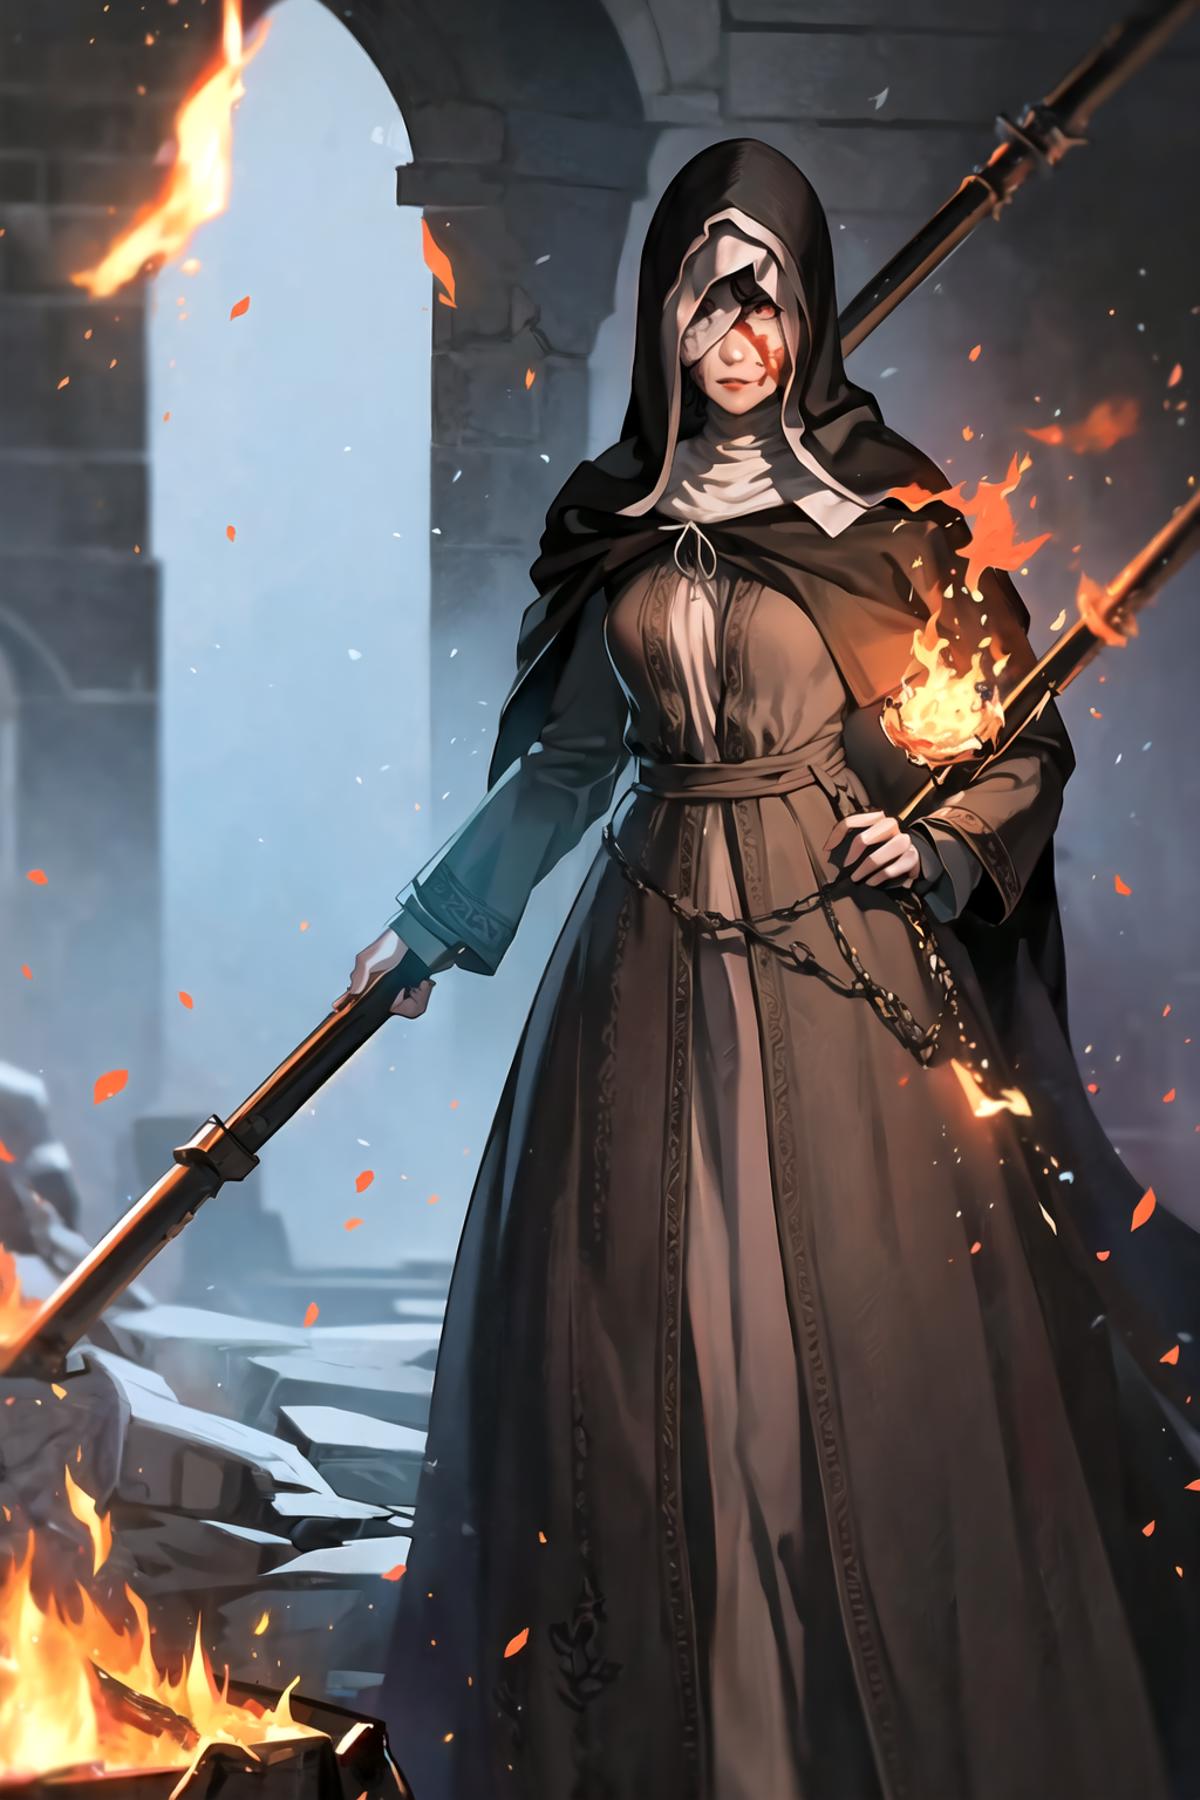 Sister Friede | Dark Souls 3 image by Finore